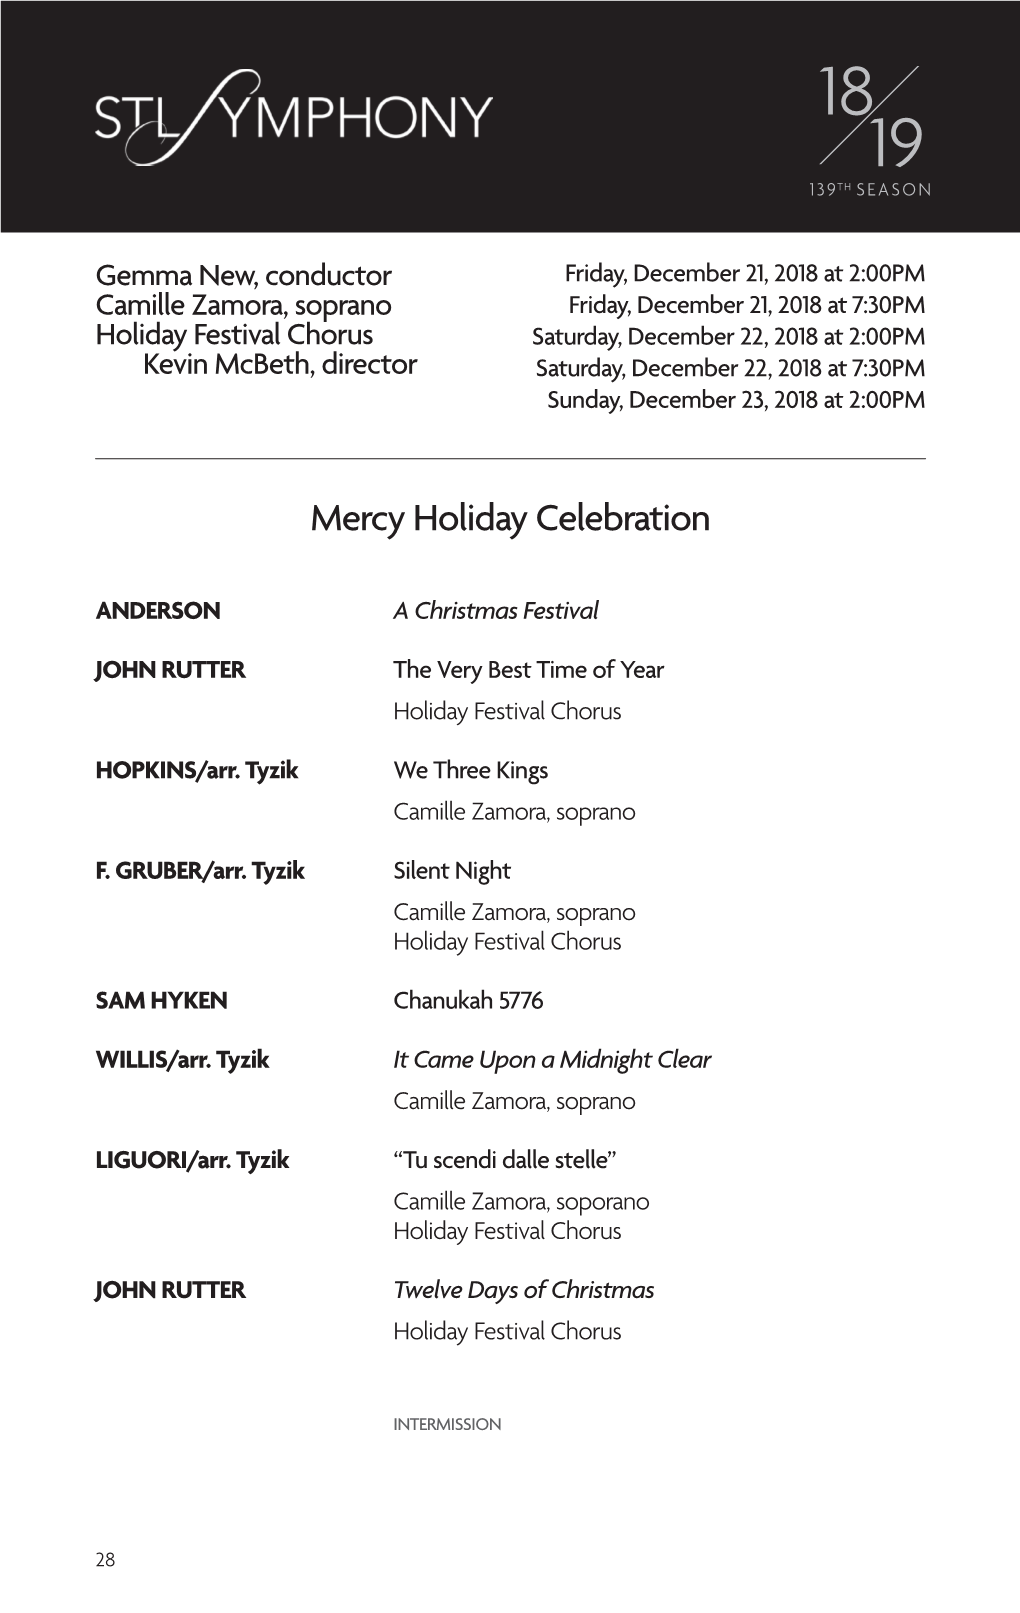 Mercy Holiday Celebration